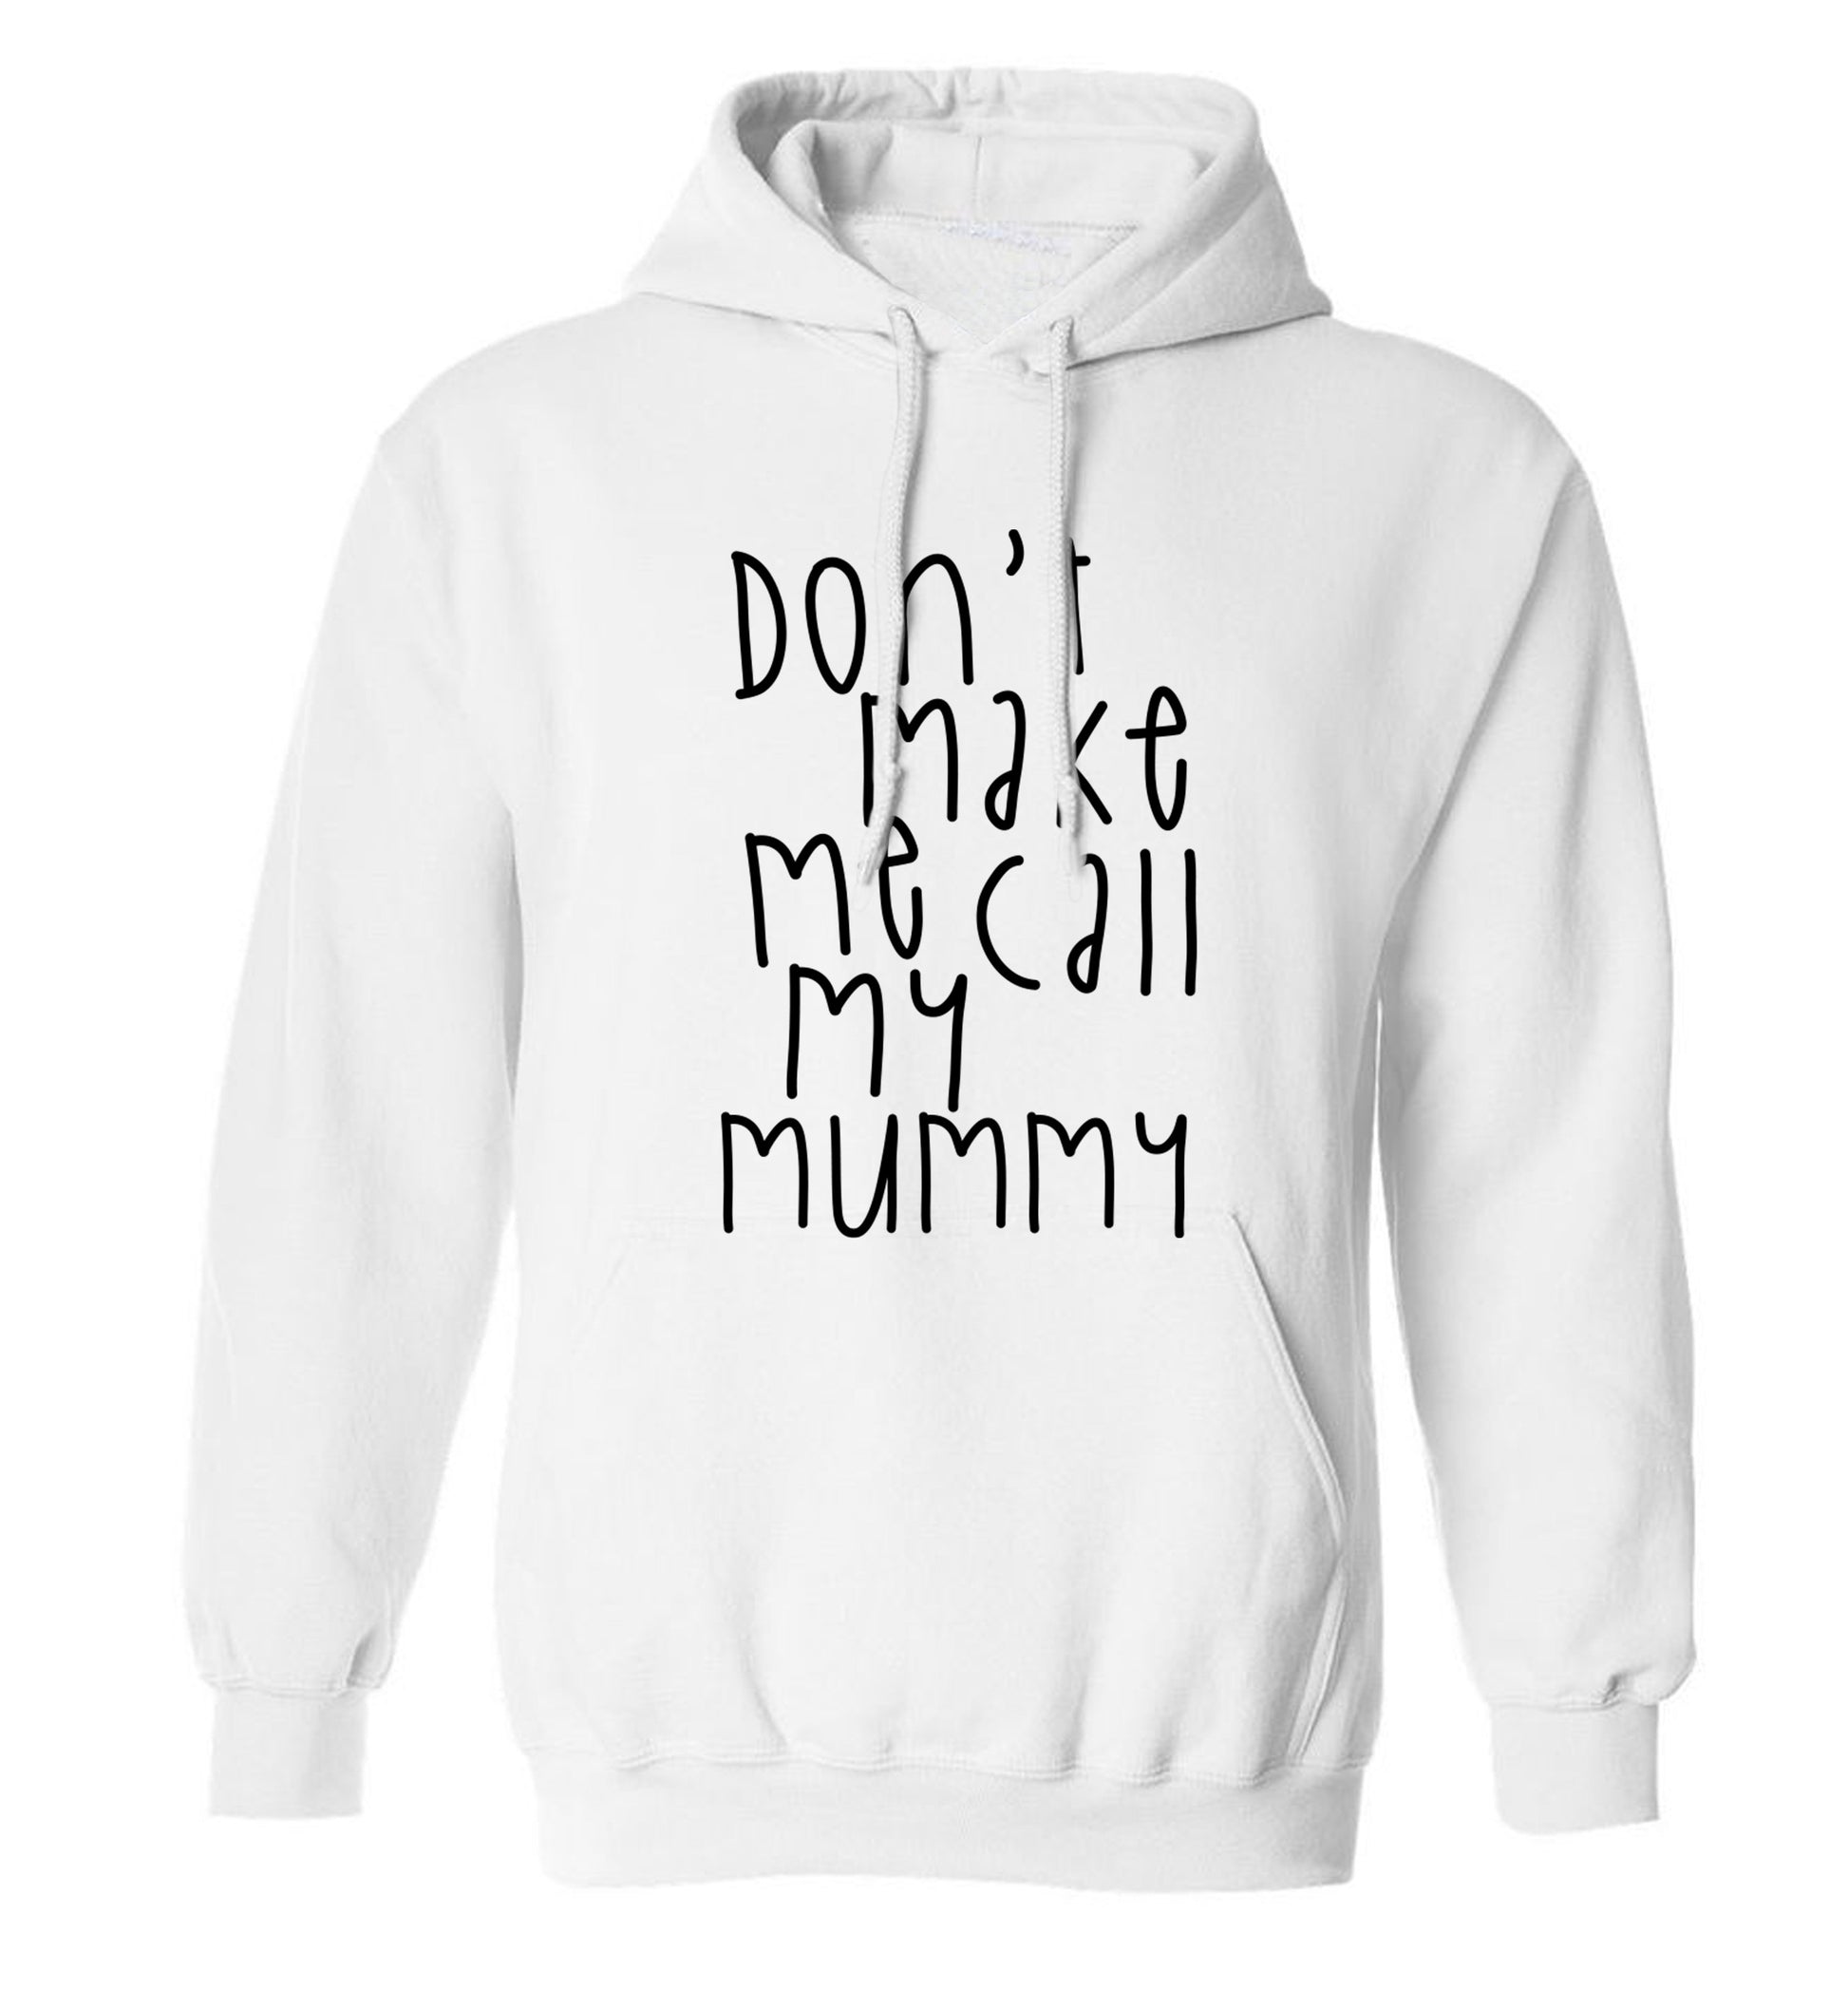 Don't make me call my mummy adults unisex white hoodie 2XL